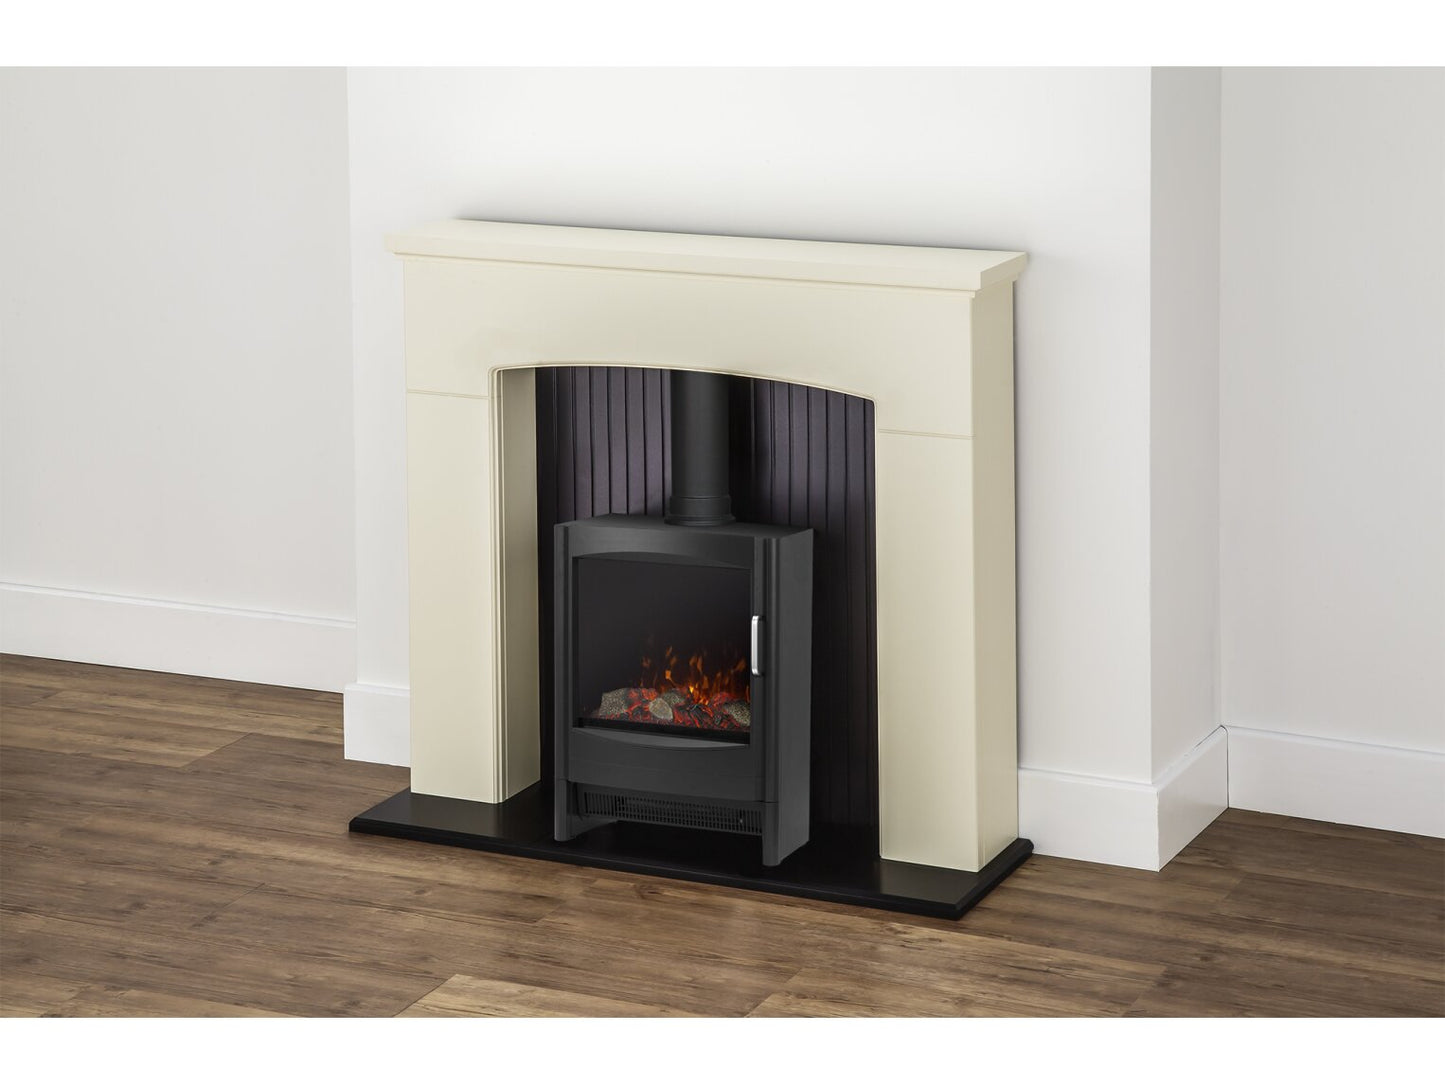 Adam Derwent Stove Fireplace in Cream with Keston Electric Stove 48 Inch 23514 Black